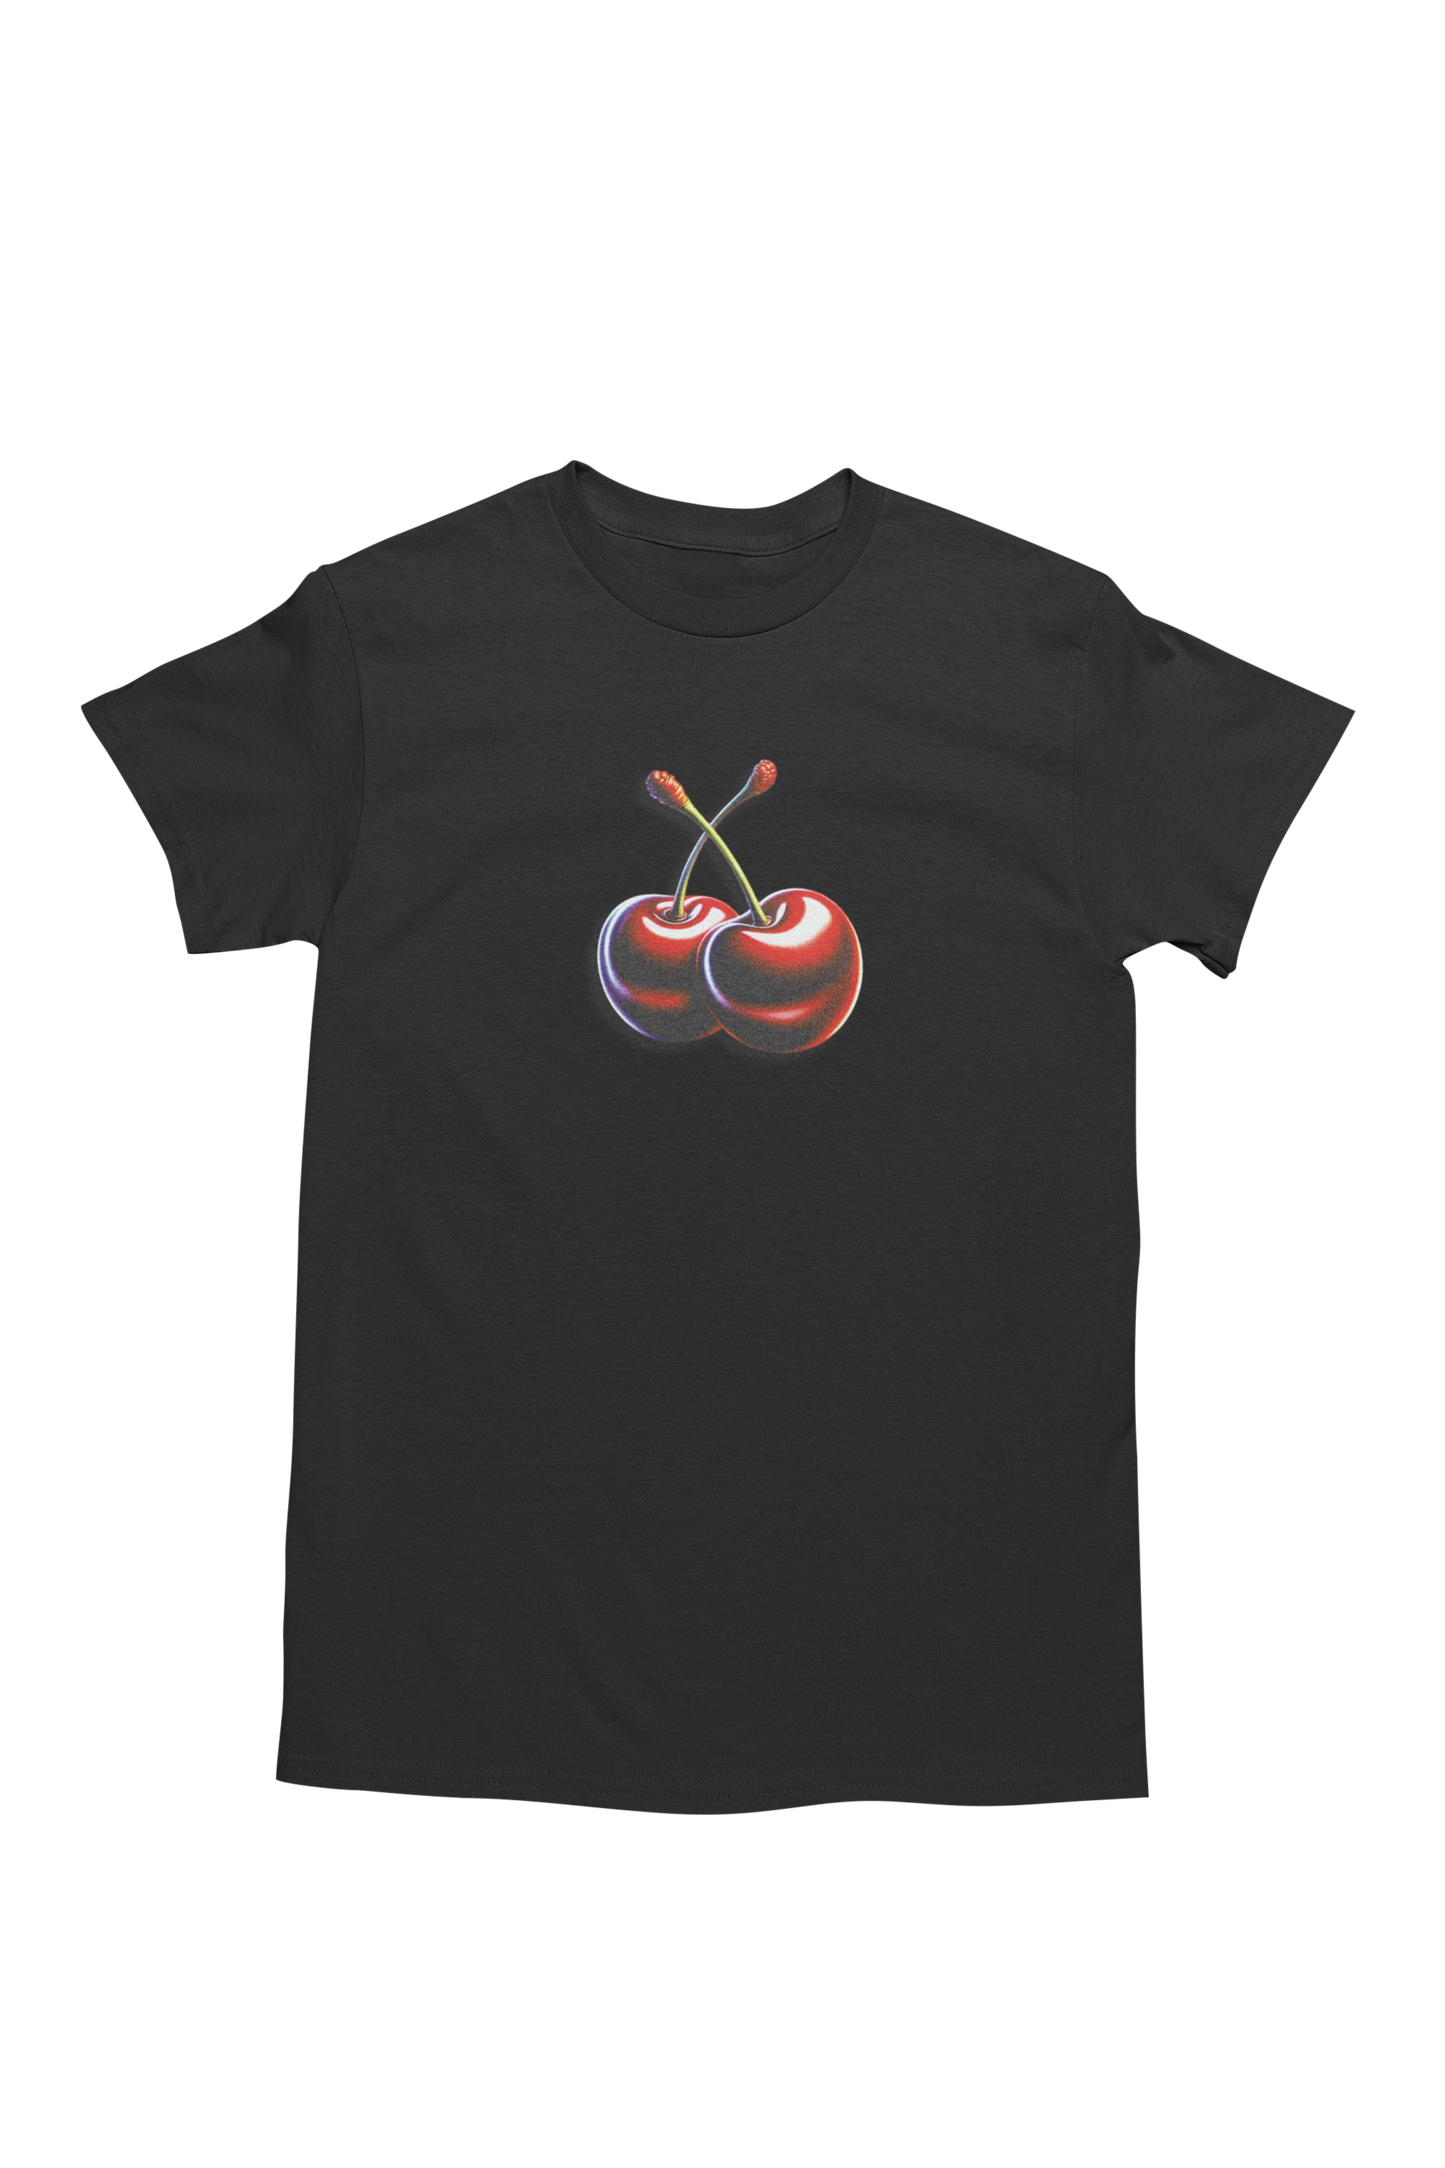 Good Hearts Club - Cherry Bomb Tee Shirt